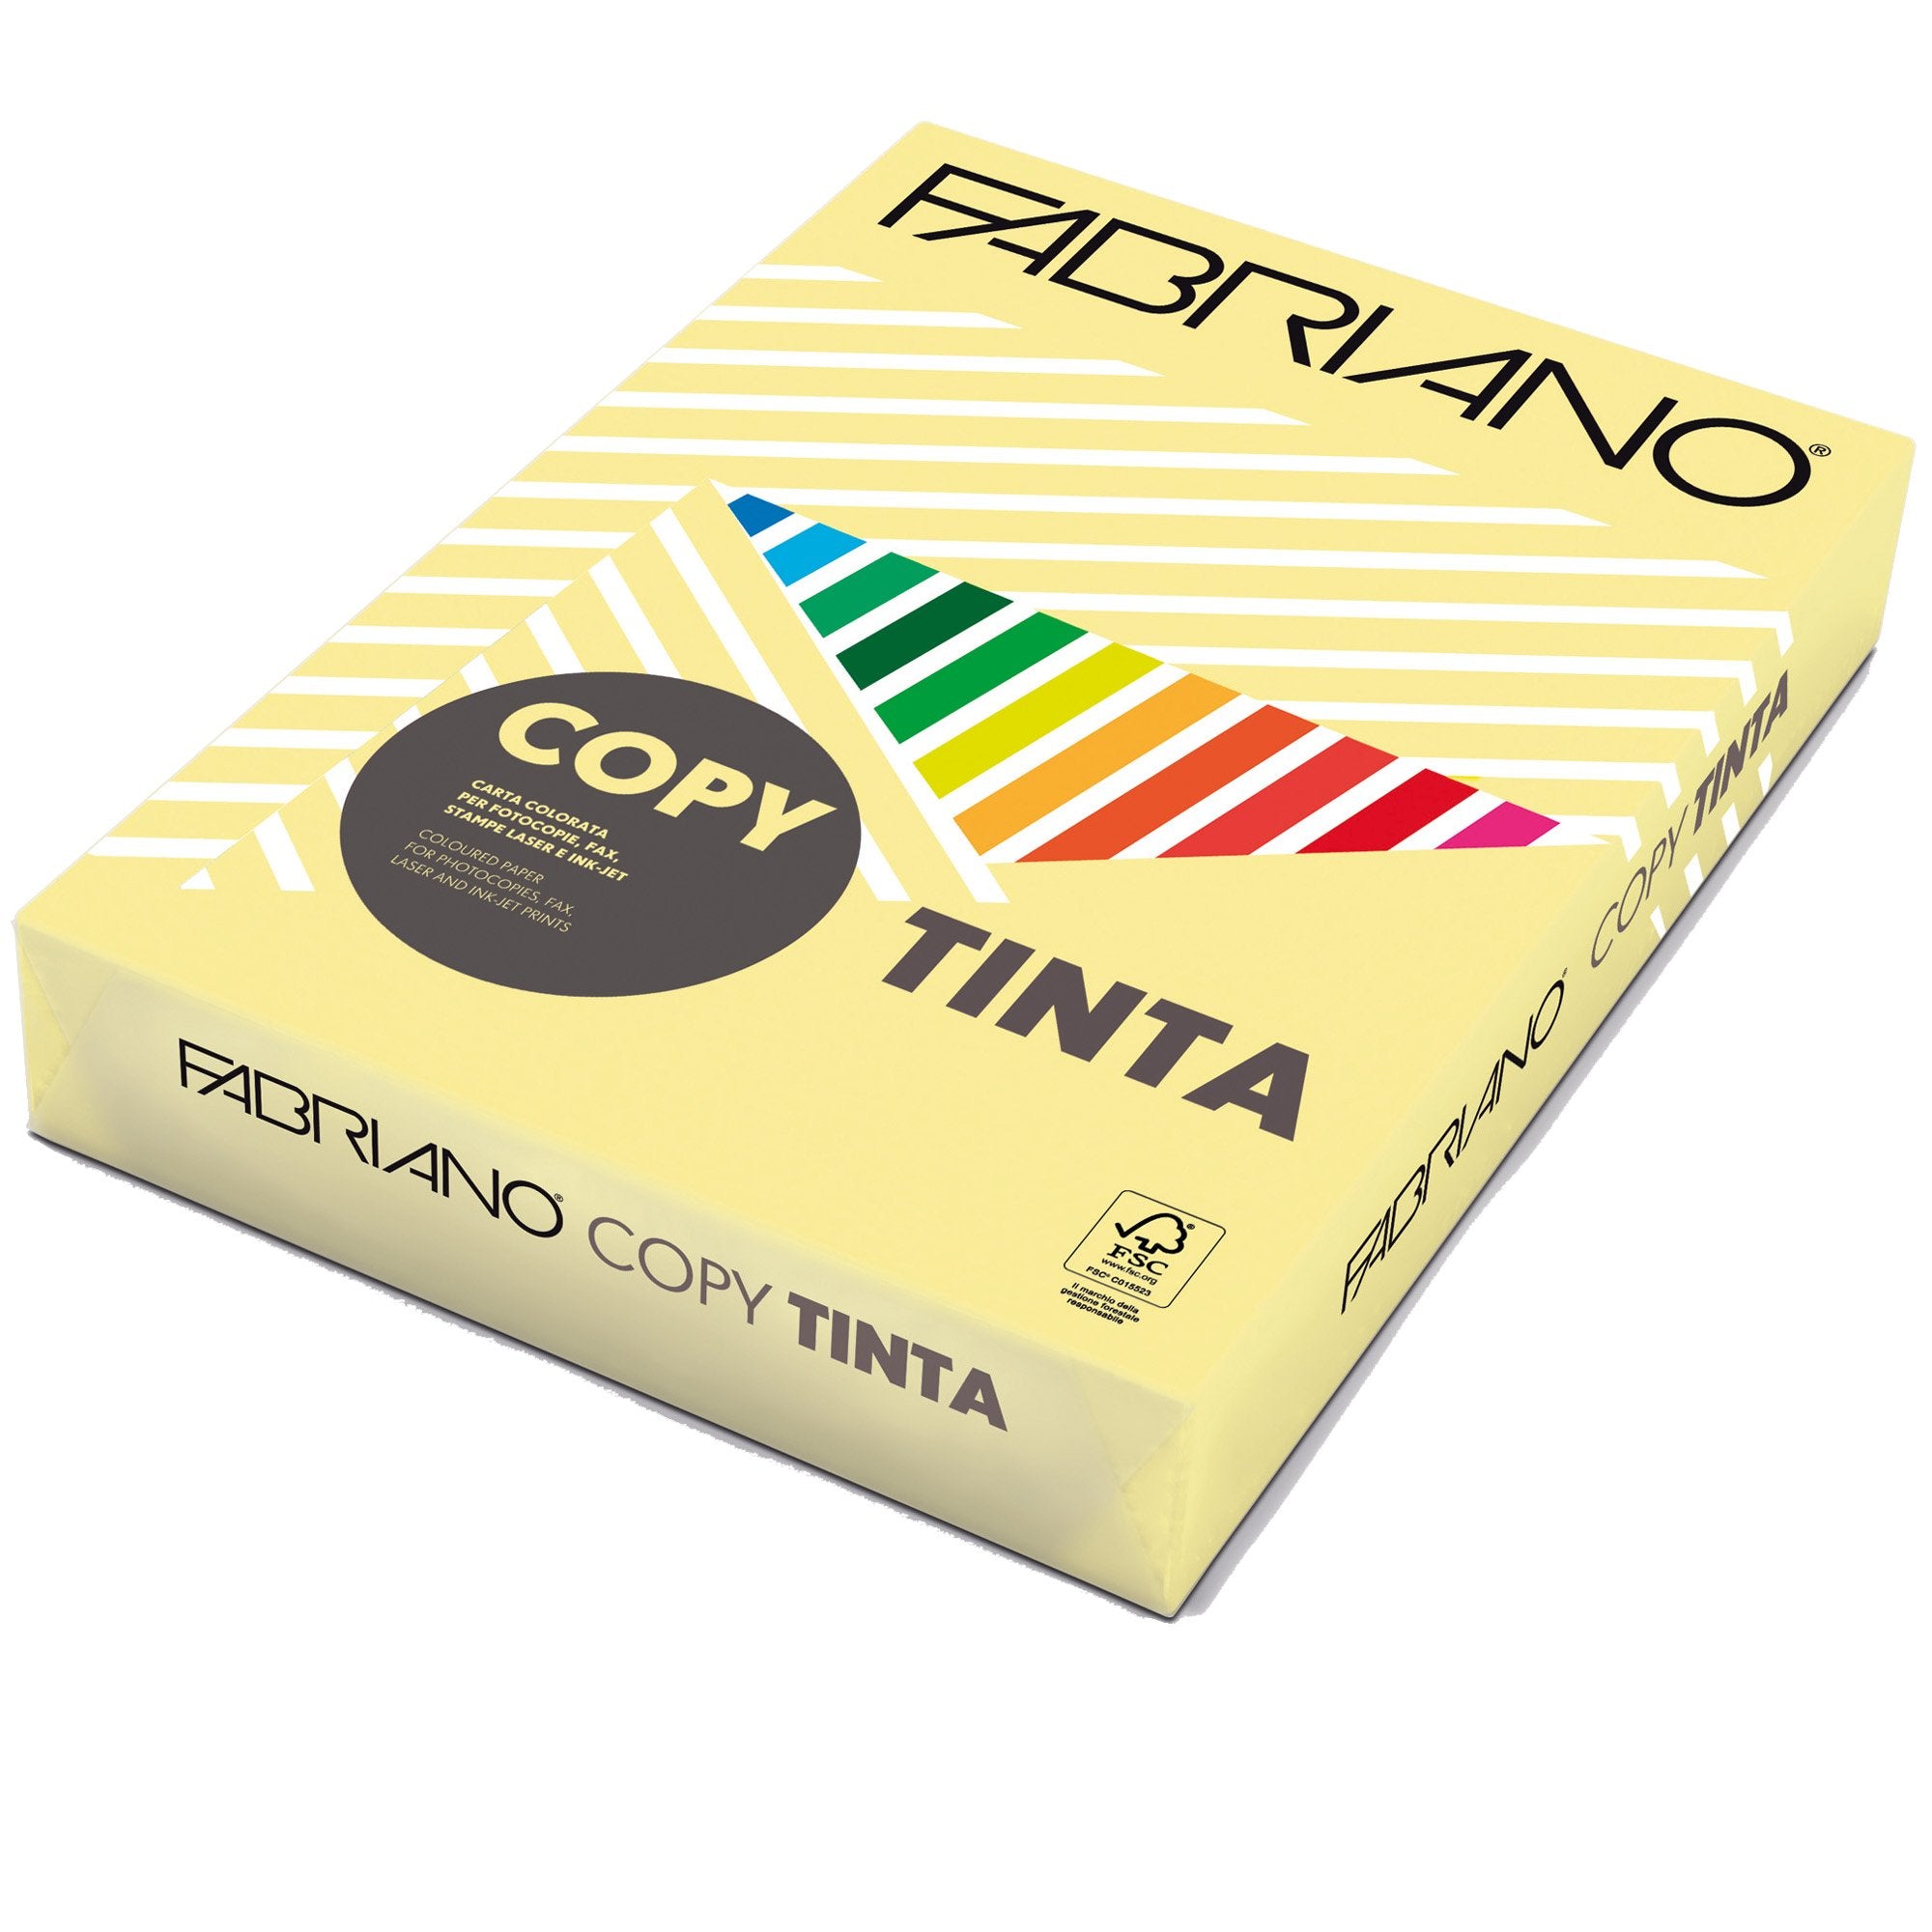 fabriano-carta-copy-tinta-a4-80gr-500fg-col-tenue-banana